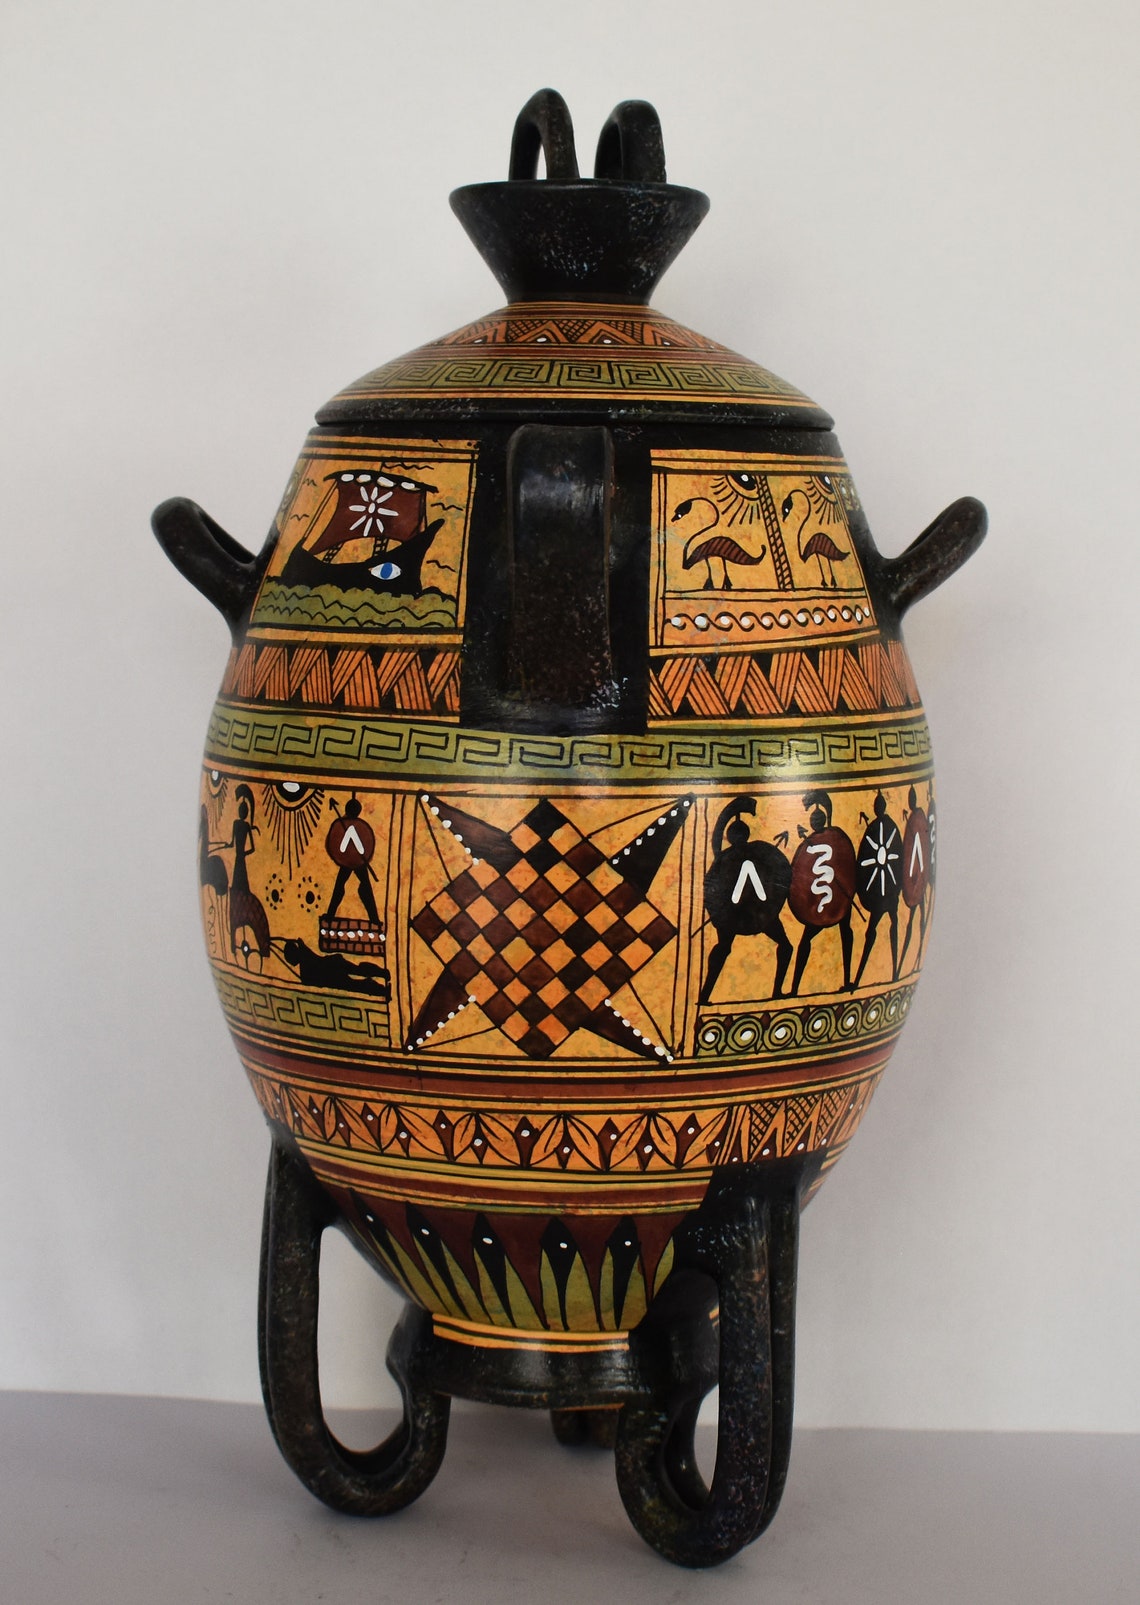 Ancient Greek vase Spartan Warriors Chariot 0wl Athenian | Etsy